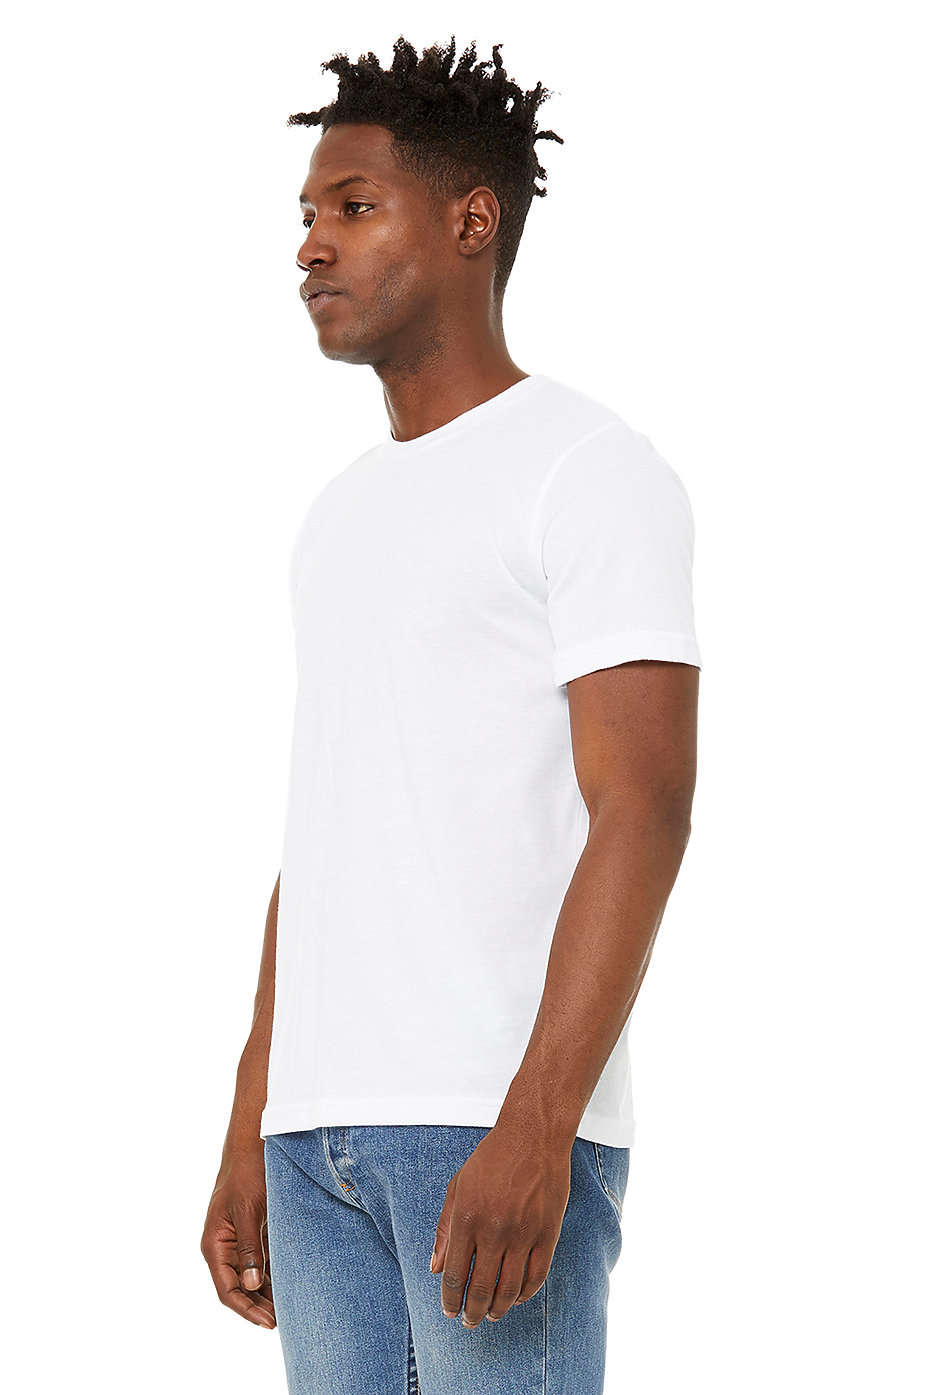 Unisex Sueded Tee | Wholesale Blank T Shirts | Bulk, Plain T Shirts ...